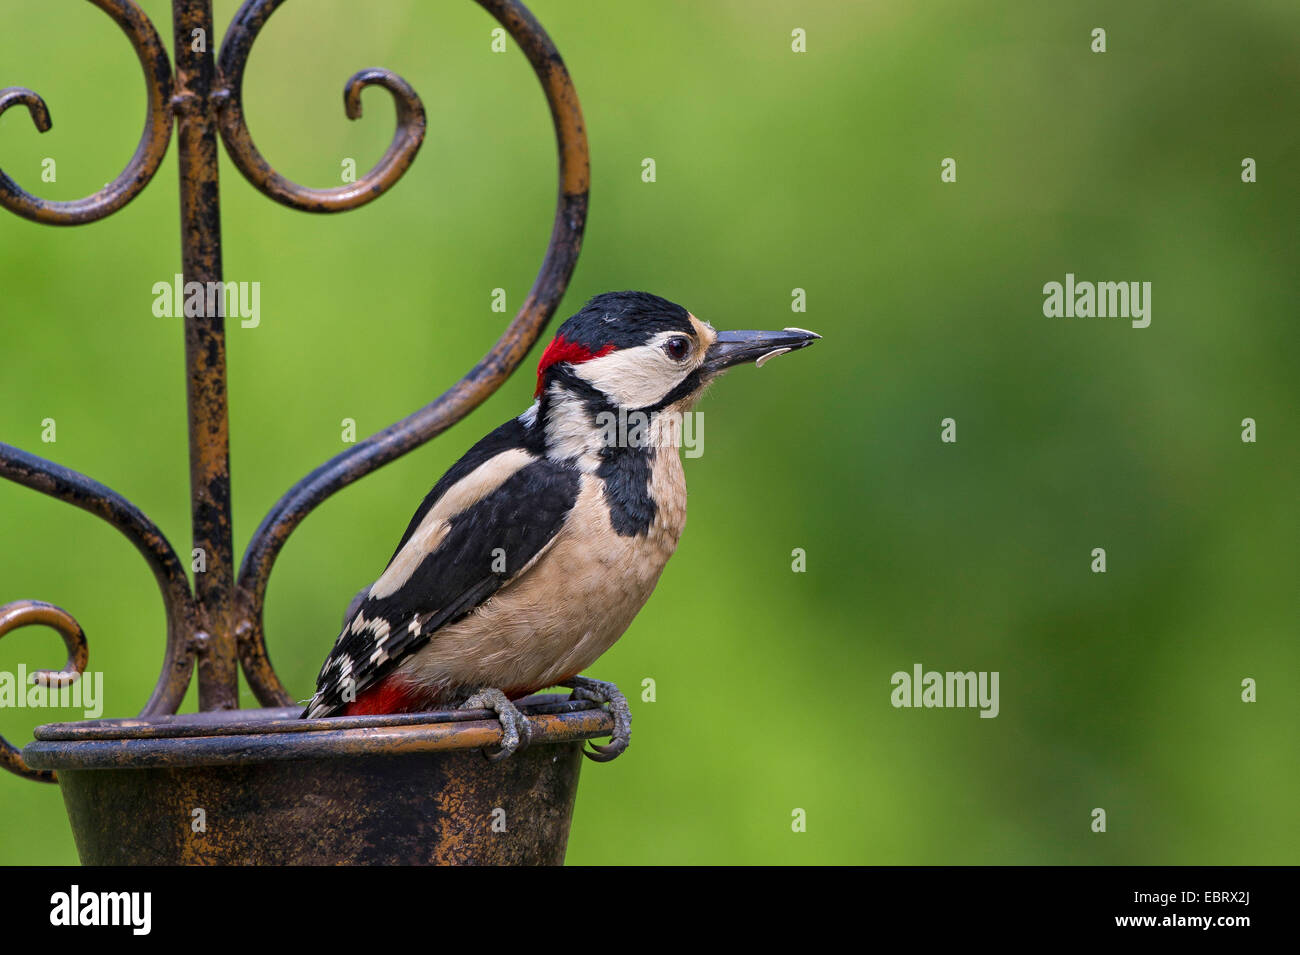 Great spotted woodpecker (Picoides major, Dendrocopos major), homme sur le siège d'alimentation sur jardin, Allemagne Banque D'Images